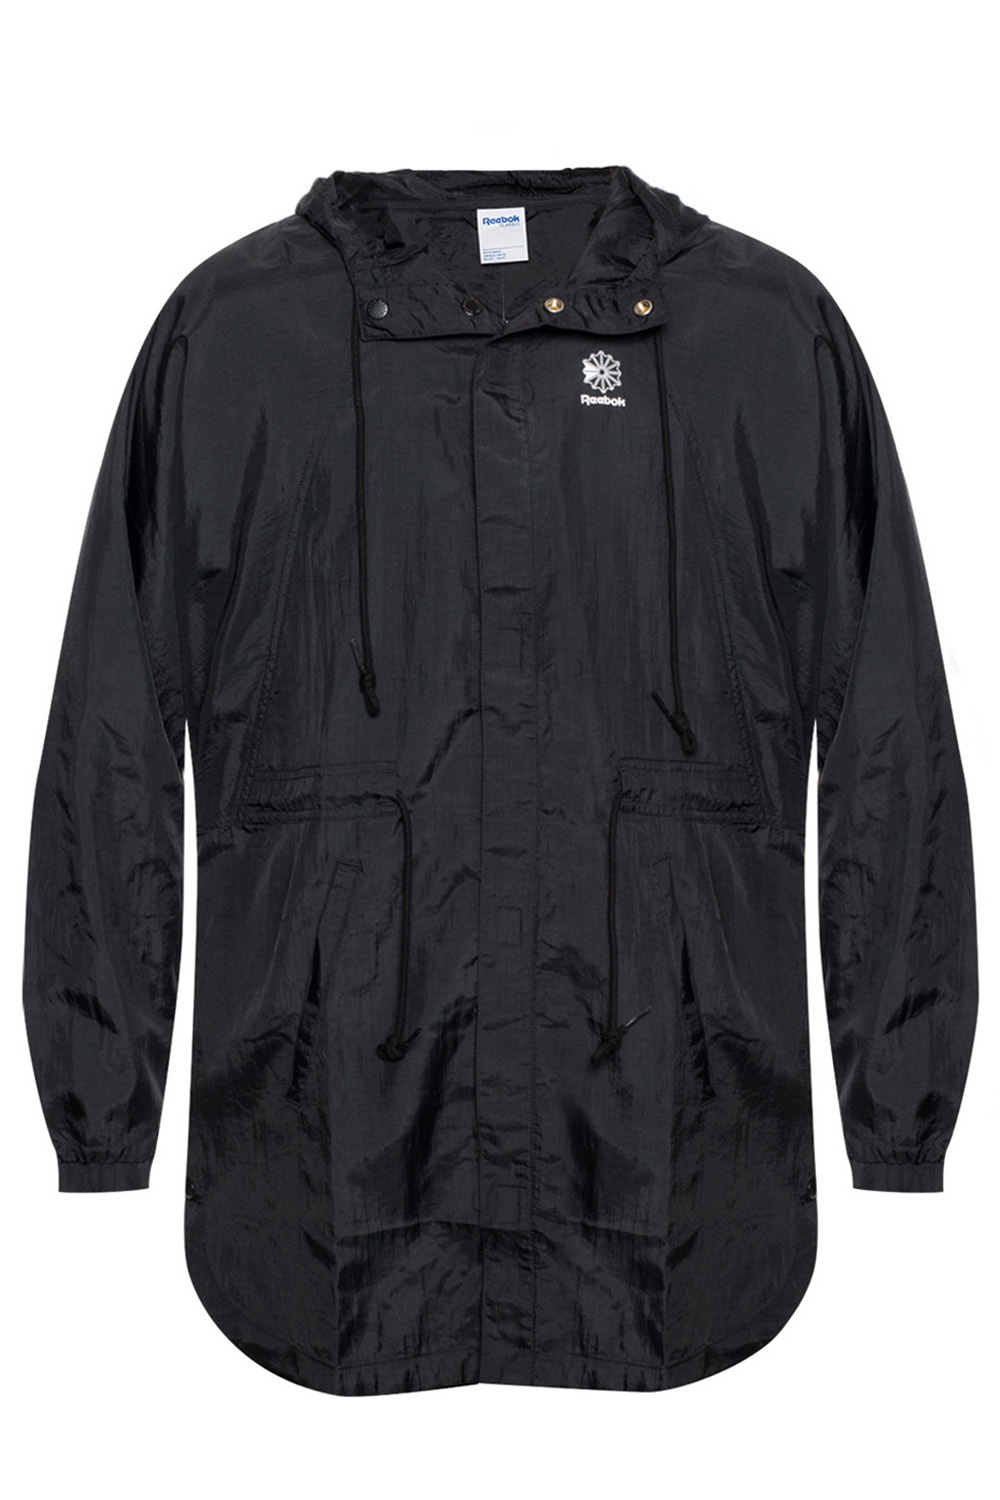 reebok rain jacket, Off 65%, www.scrimaglio.com